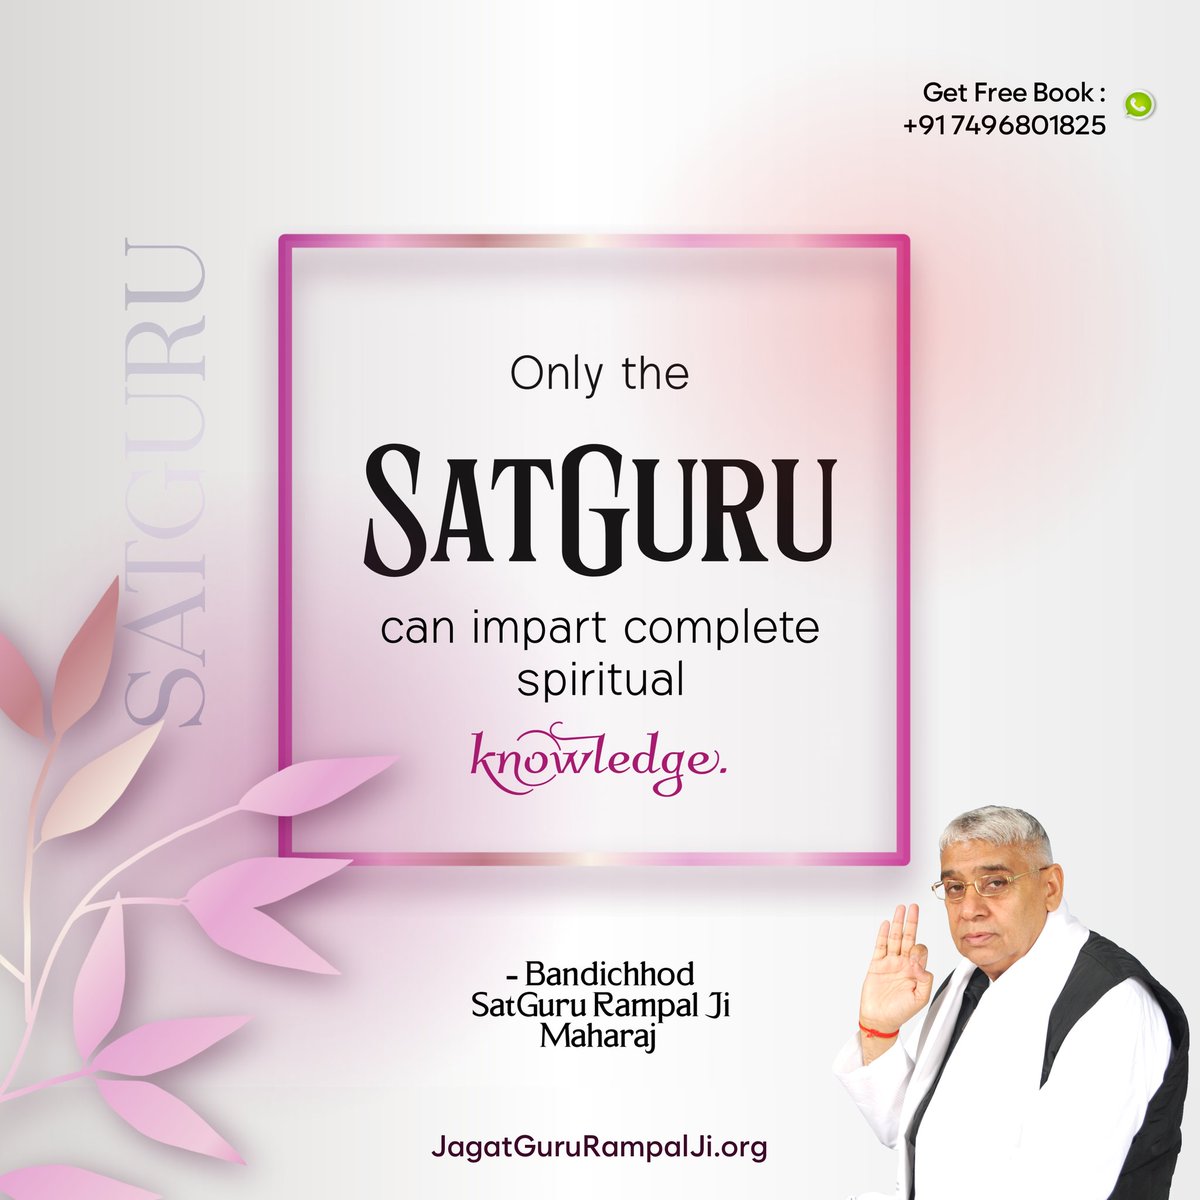 #GodMorningTuesday
#SaintRampalJiQuotes 
Only the SATGURU can impart complete spiritual knowledge.

Bandichhod SatGuru Rampal Ji Maharaj

JagatGuruRampalJi.org